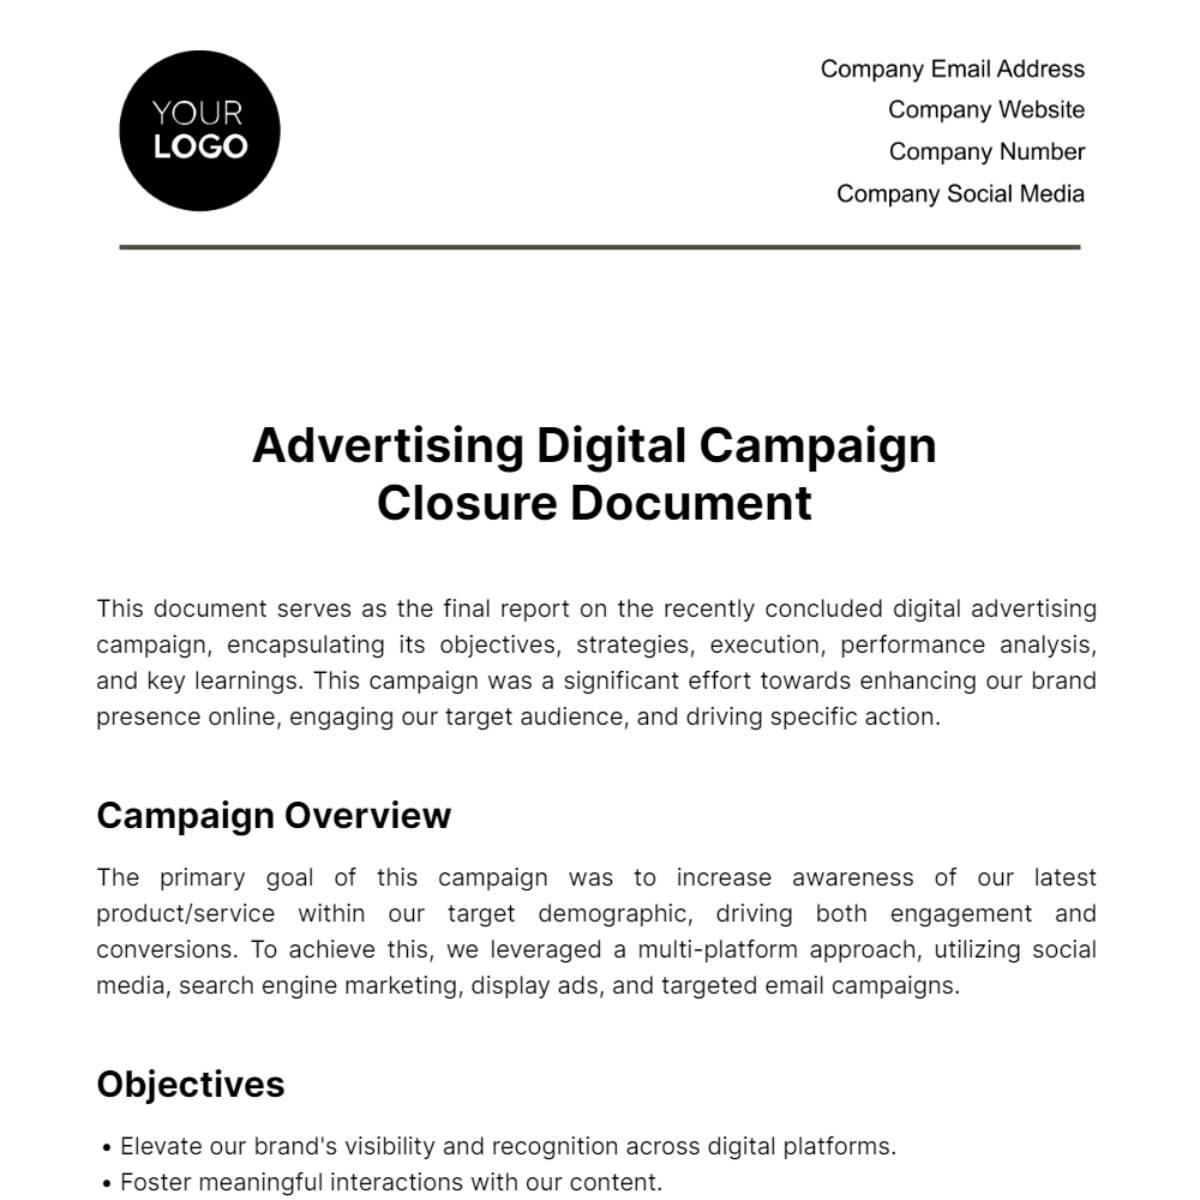 Advertising Digital Campaign Closure Document Template